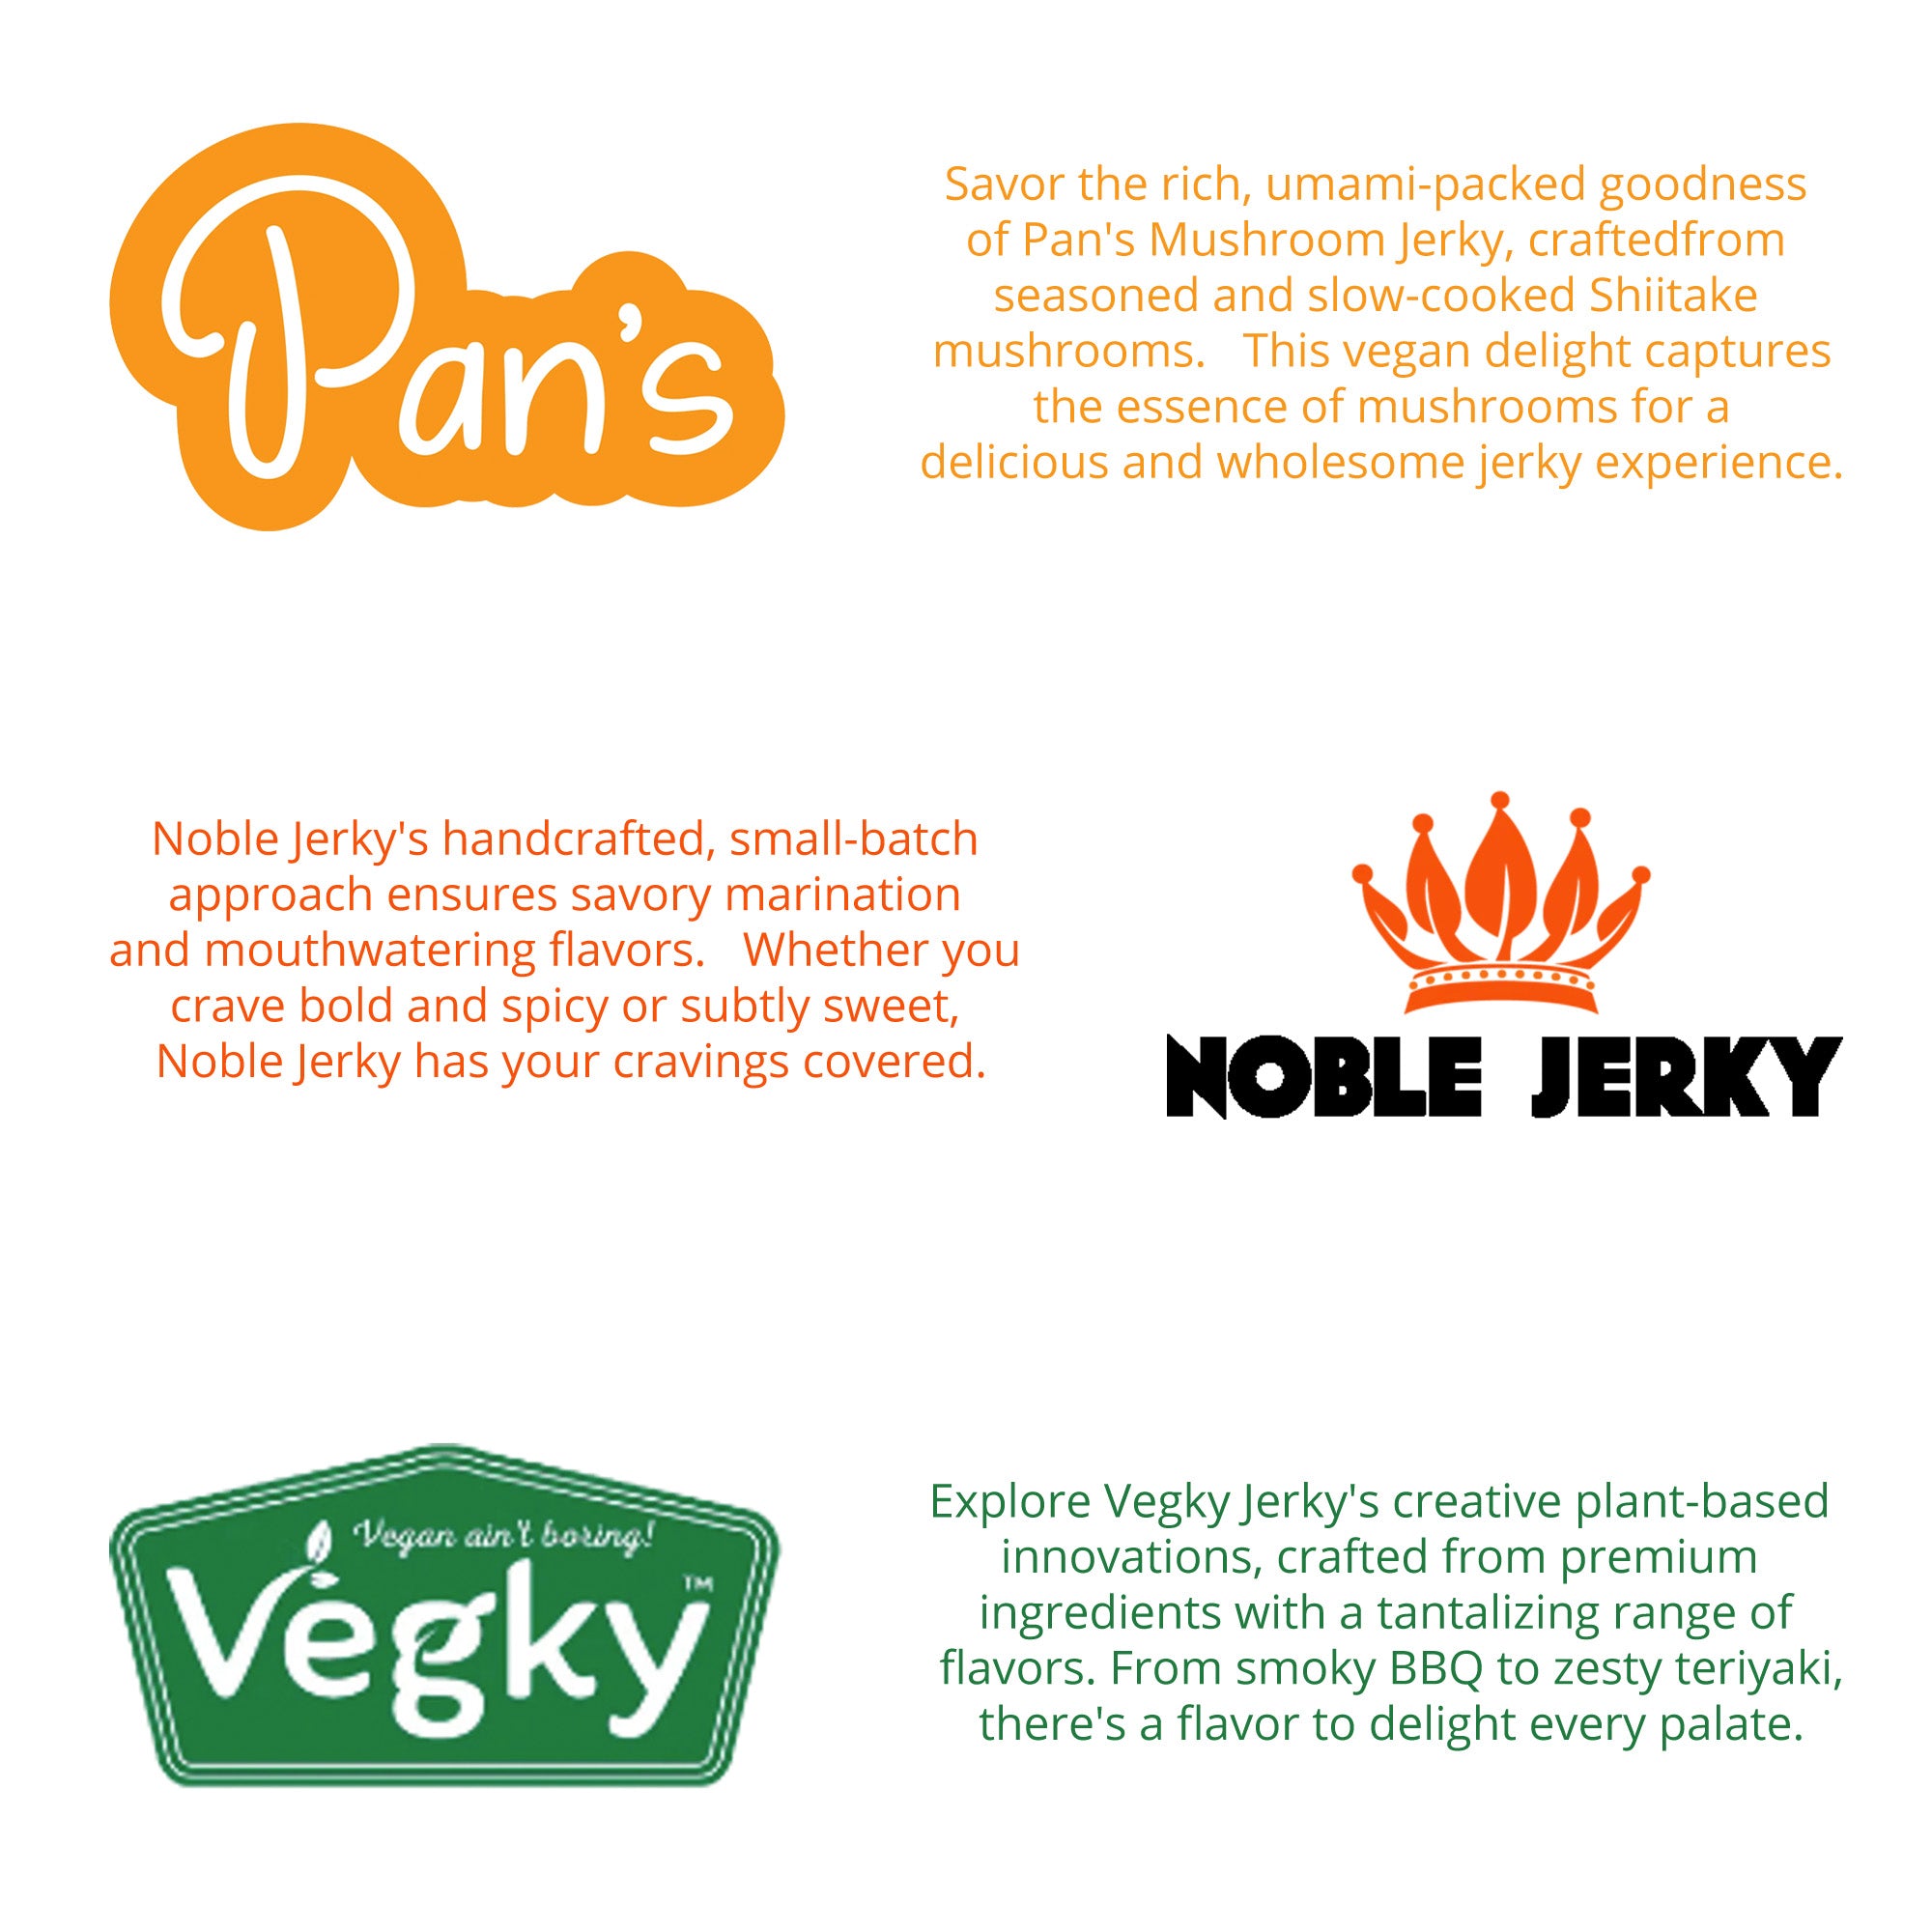 Vegan Jerky Box